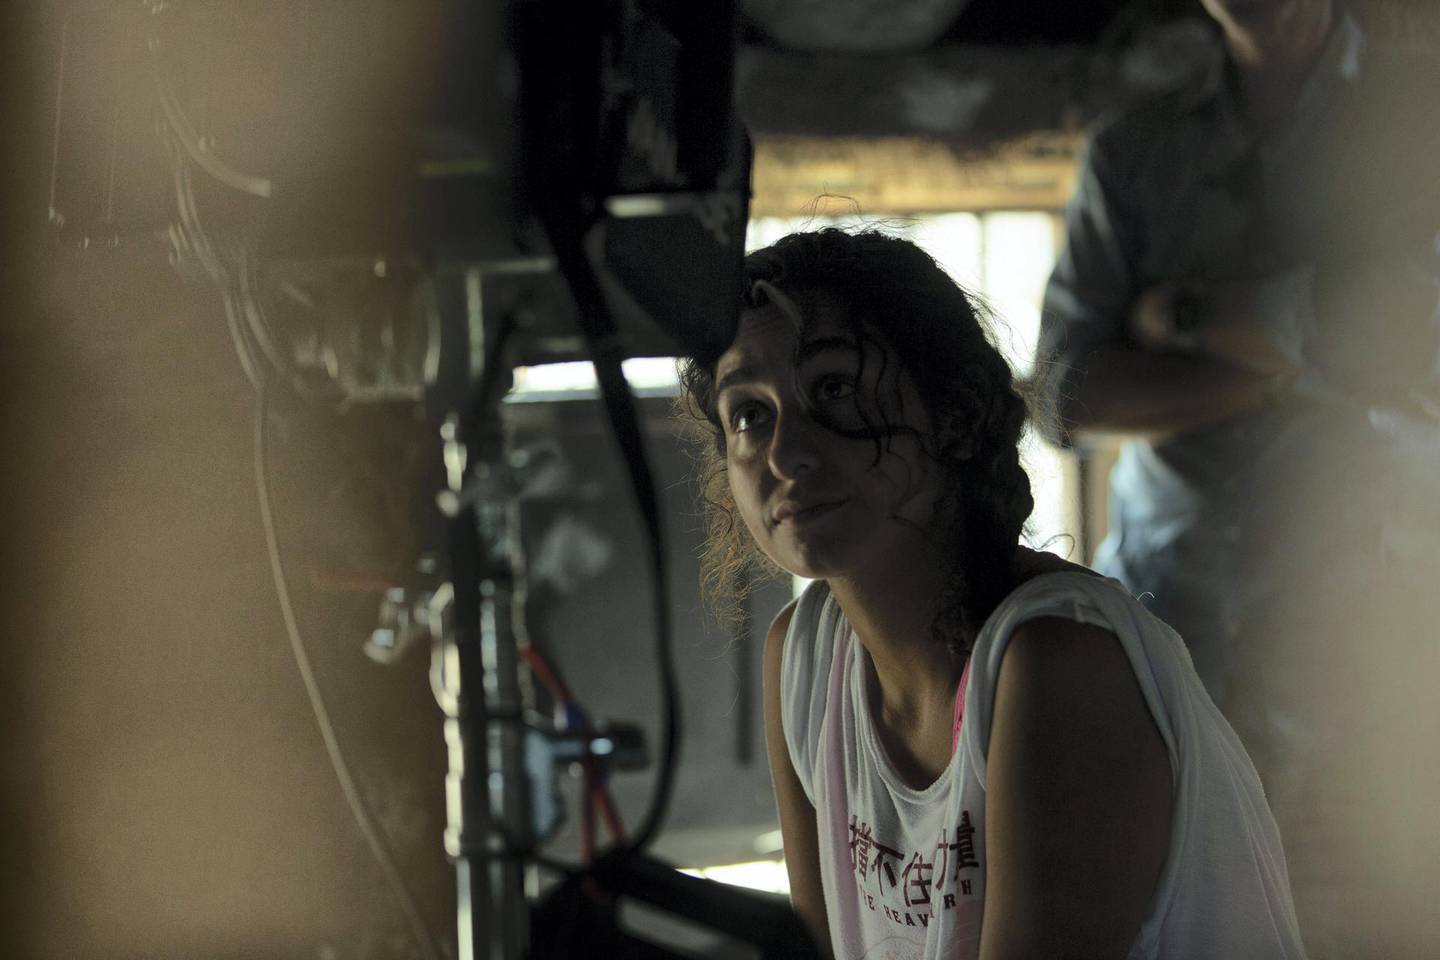 'Scale' director Shahad Ameen on set. Image Nation Abu Dhabi 